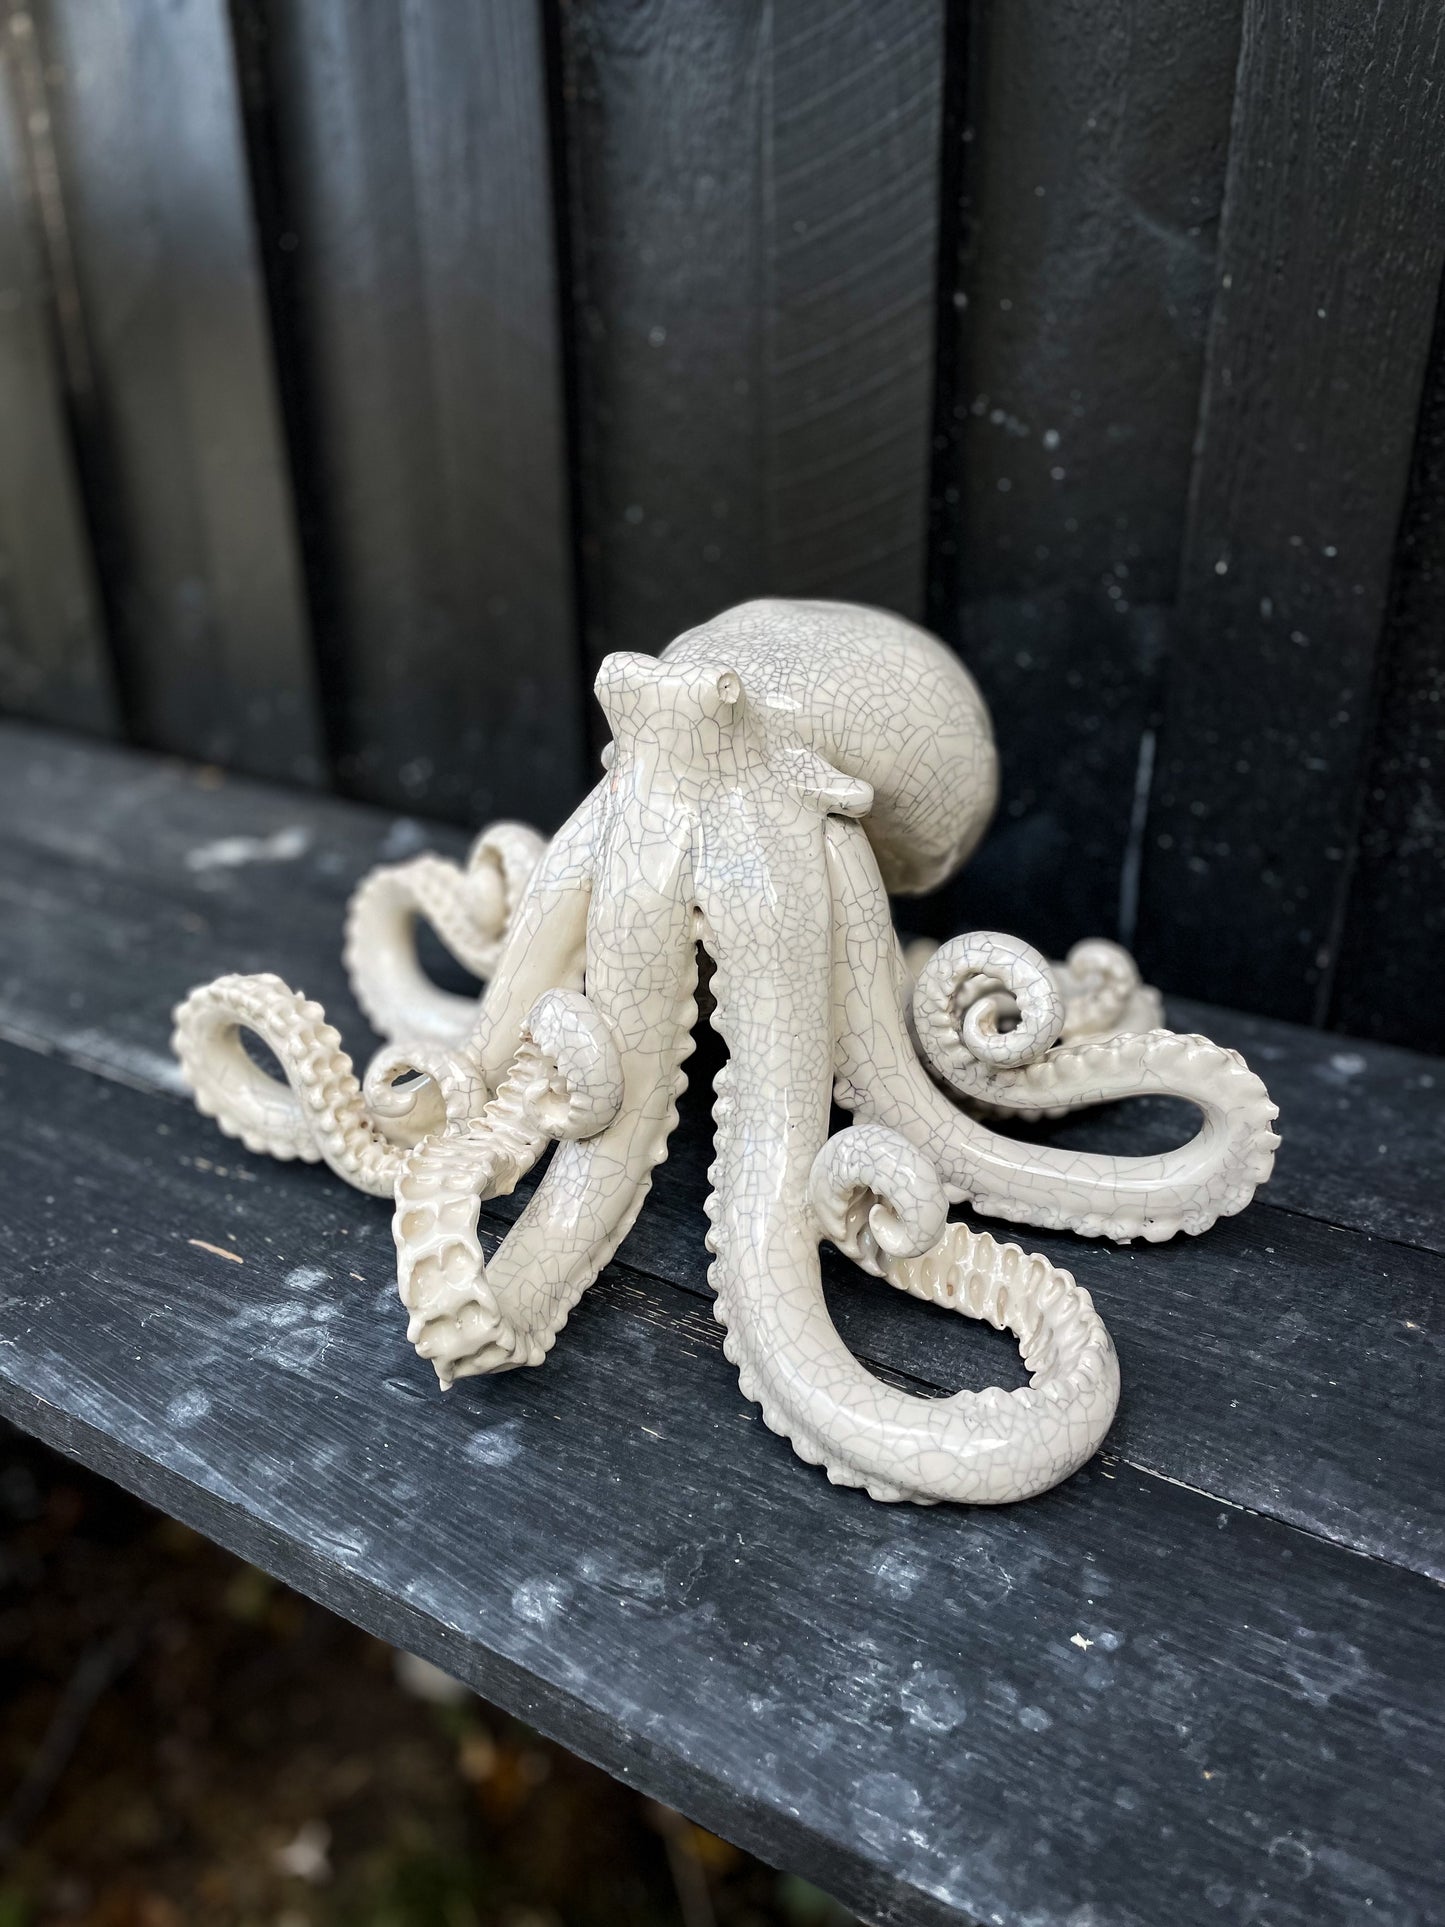 Octopus 05